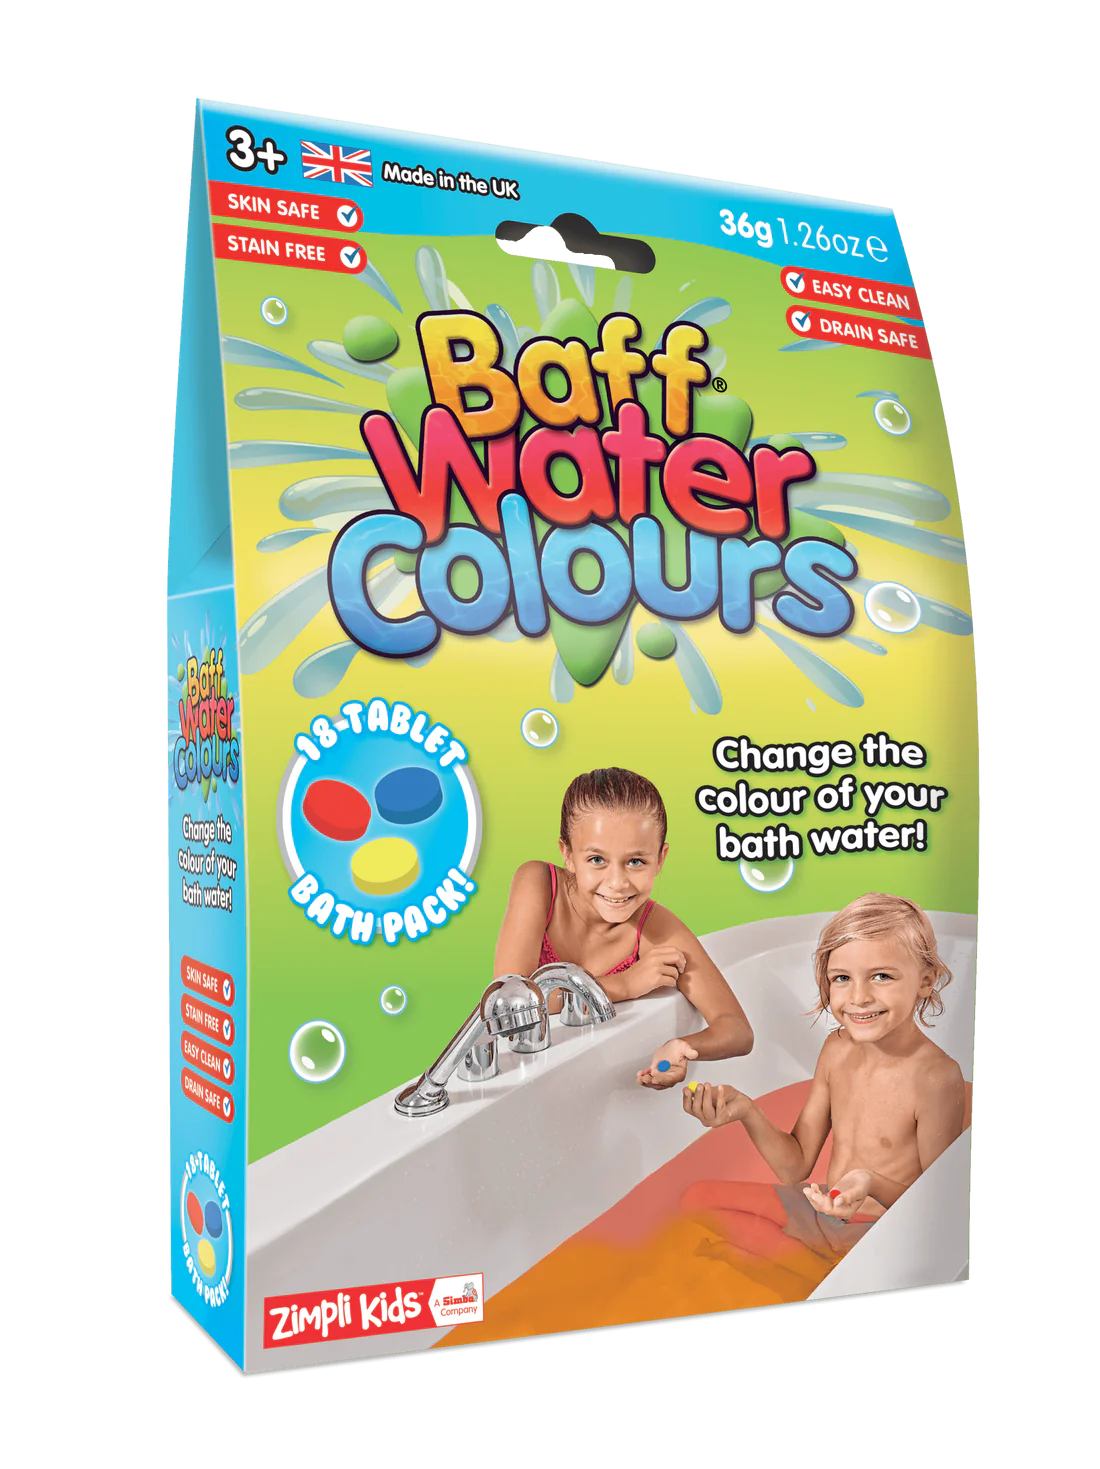 Zimpli Kids Baff Water Colours (18-pack)